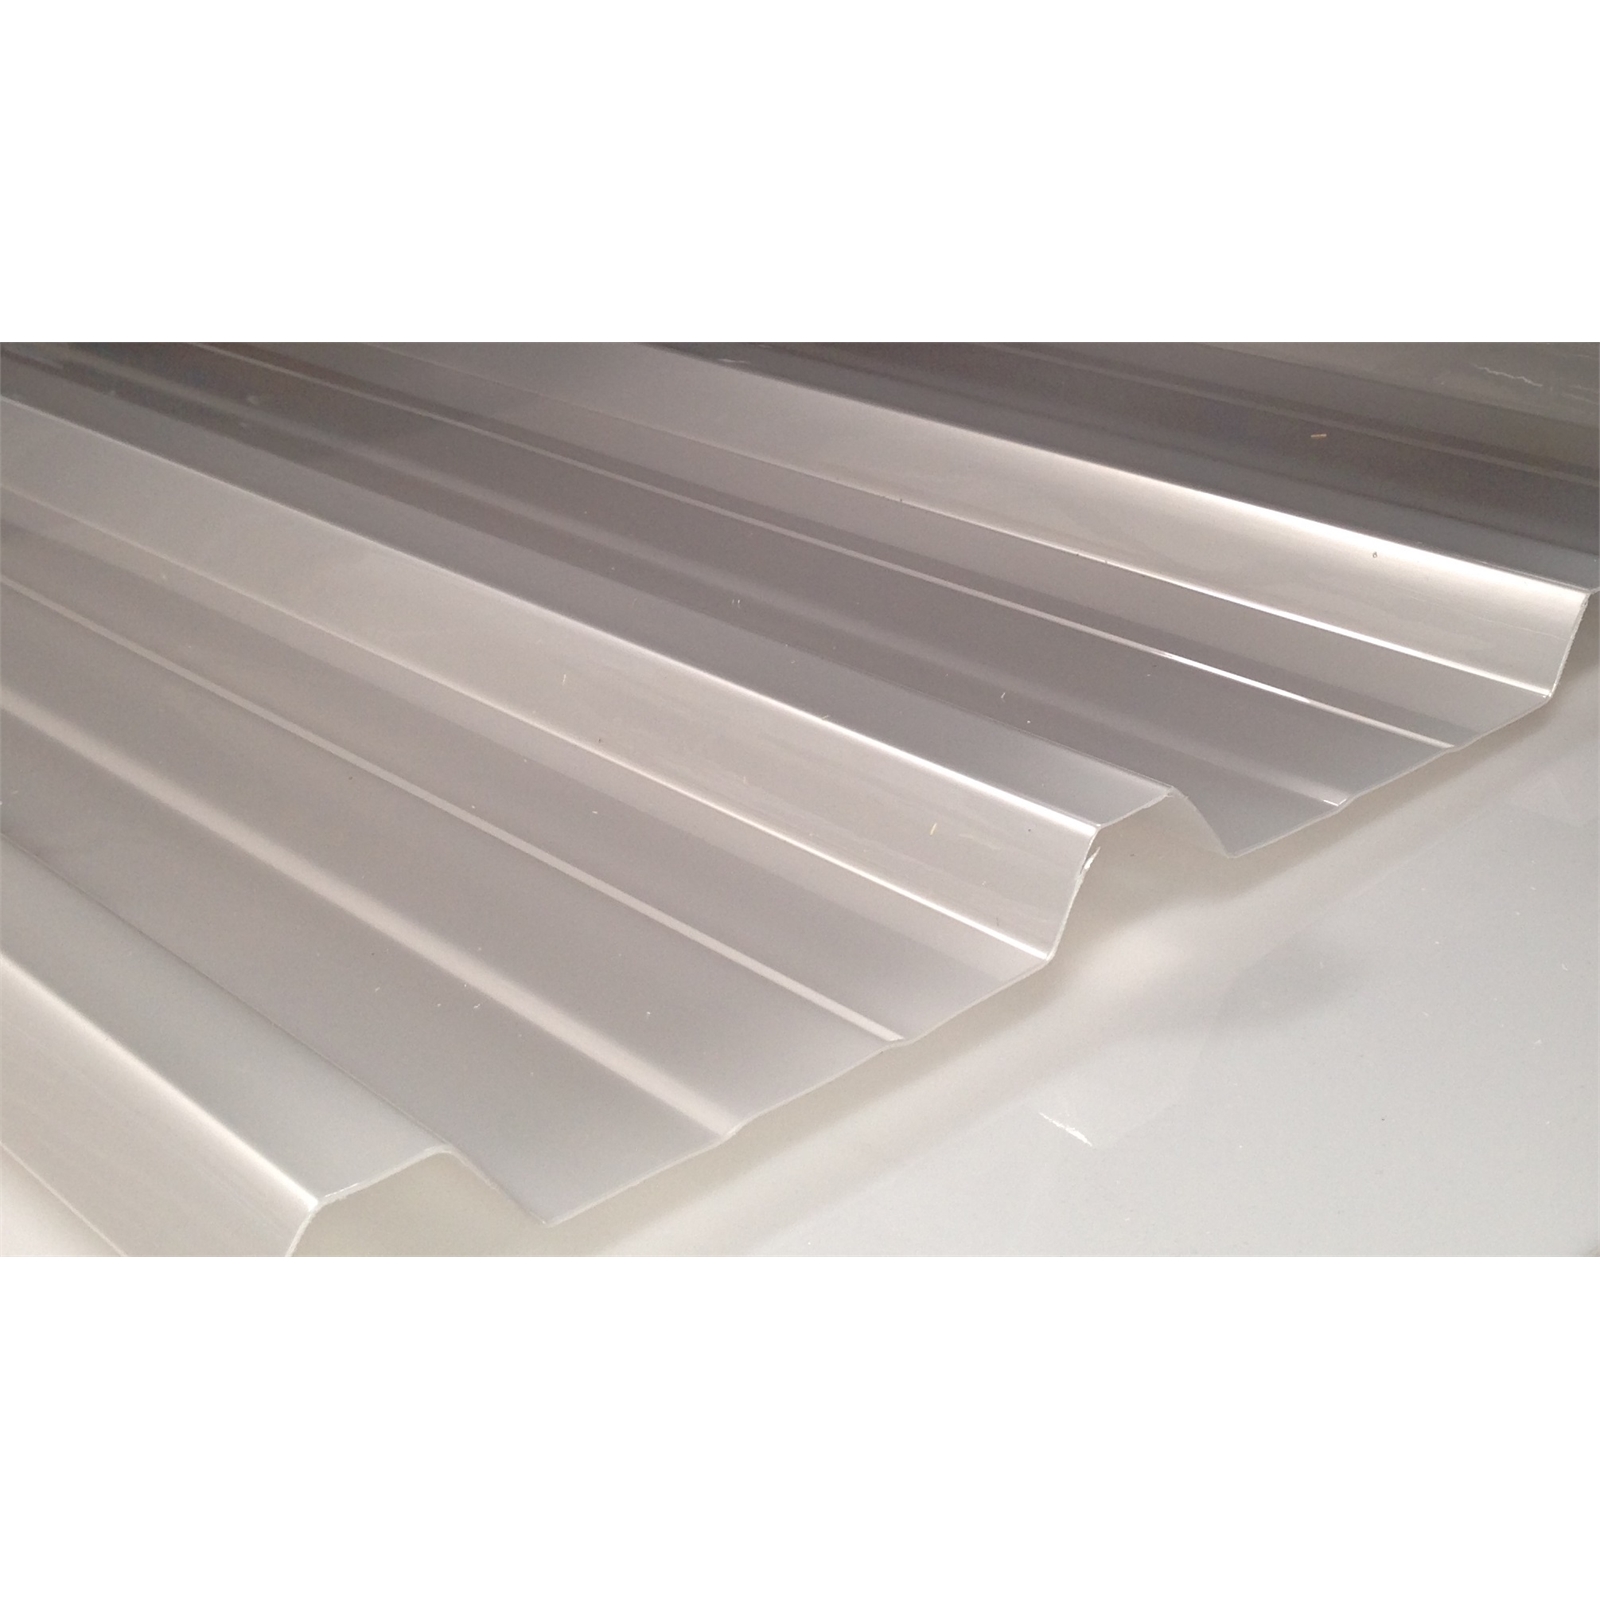 Suntuf Trimdek 1.0 x 4.8m Metallic Ice Polycarbonate Roofing